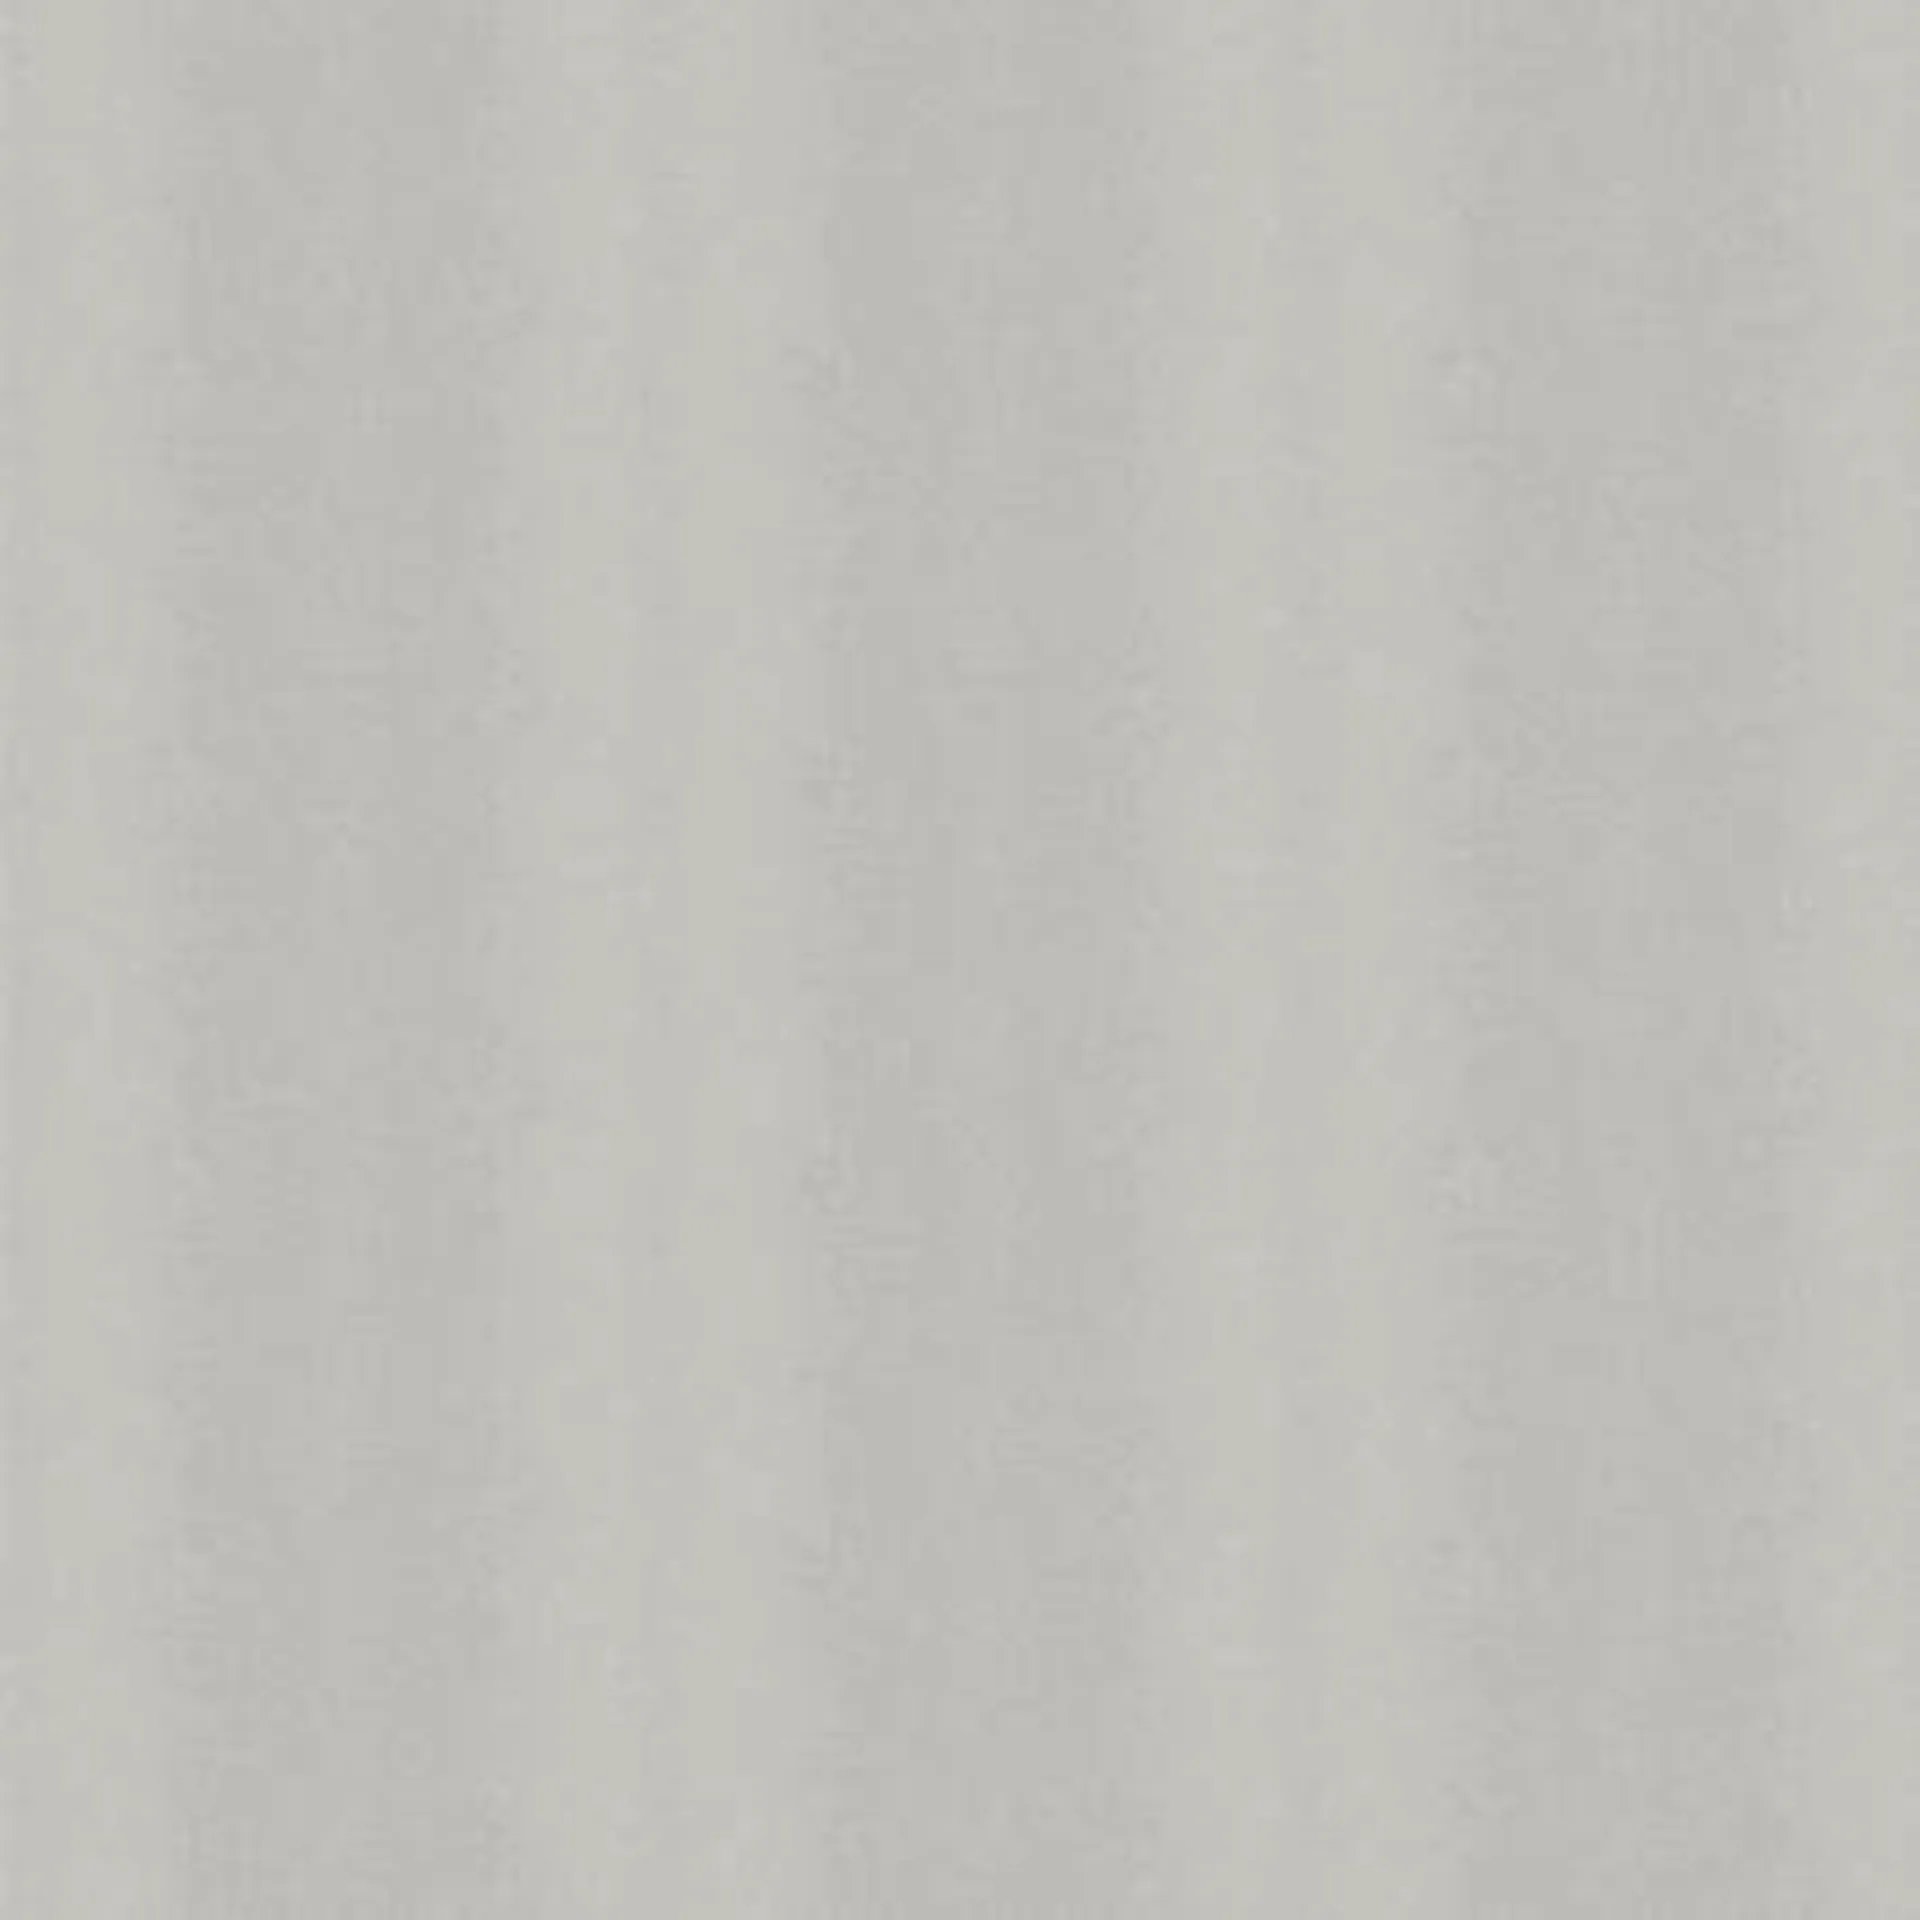 Vliesbehang dierenvacht grijs (dessin 32-651)